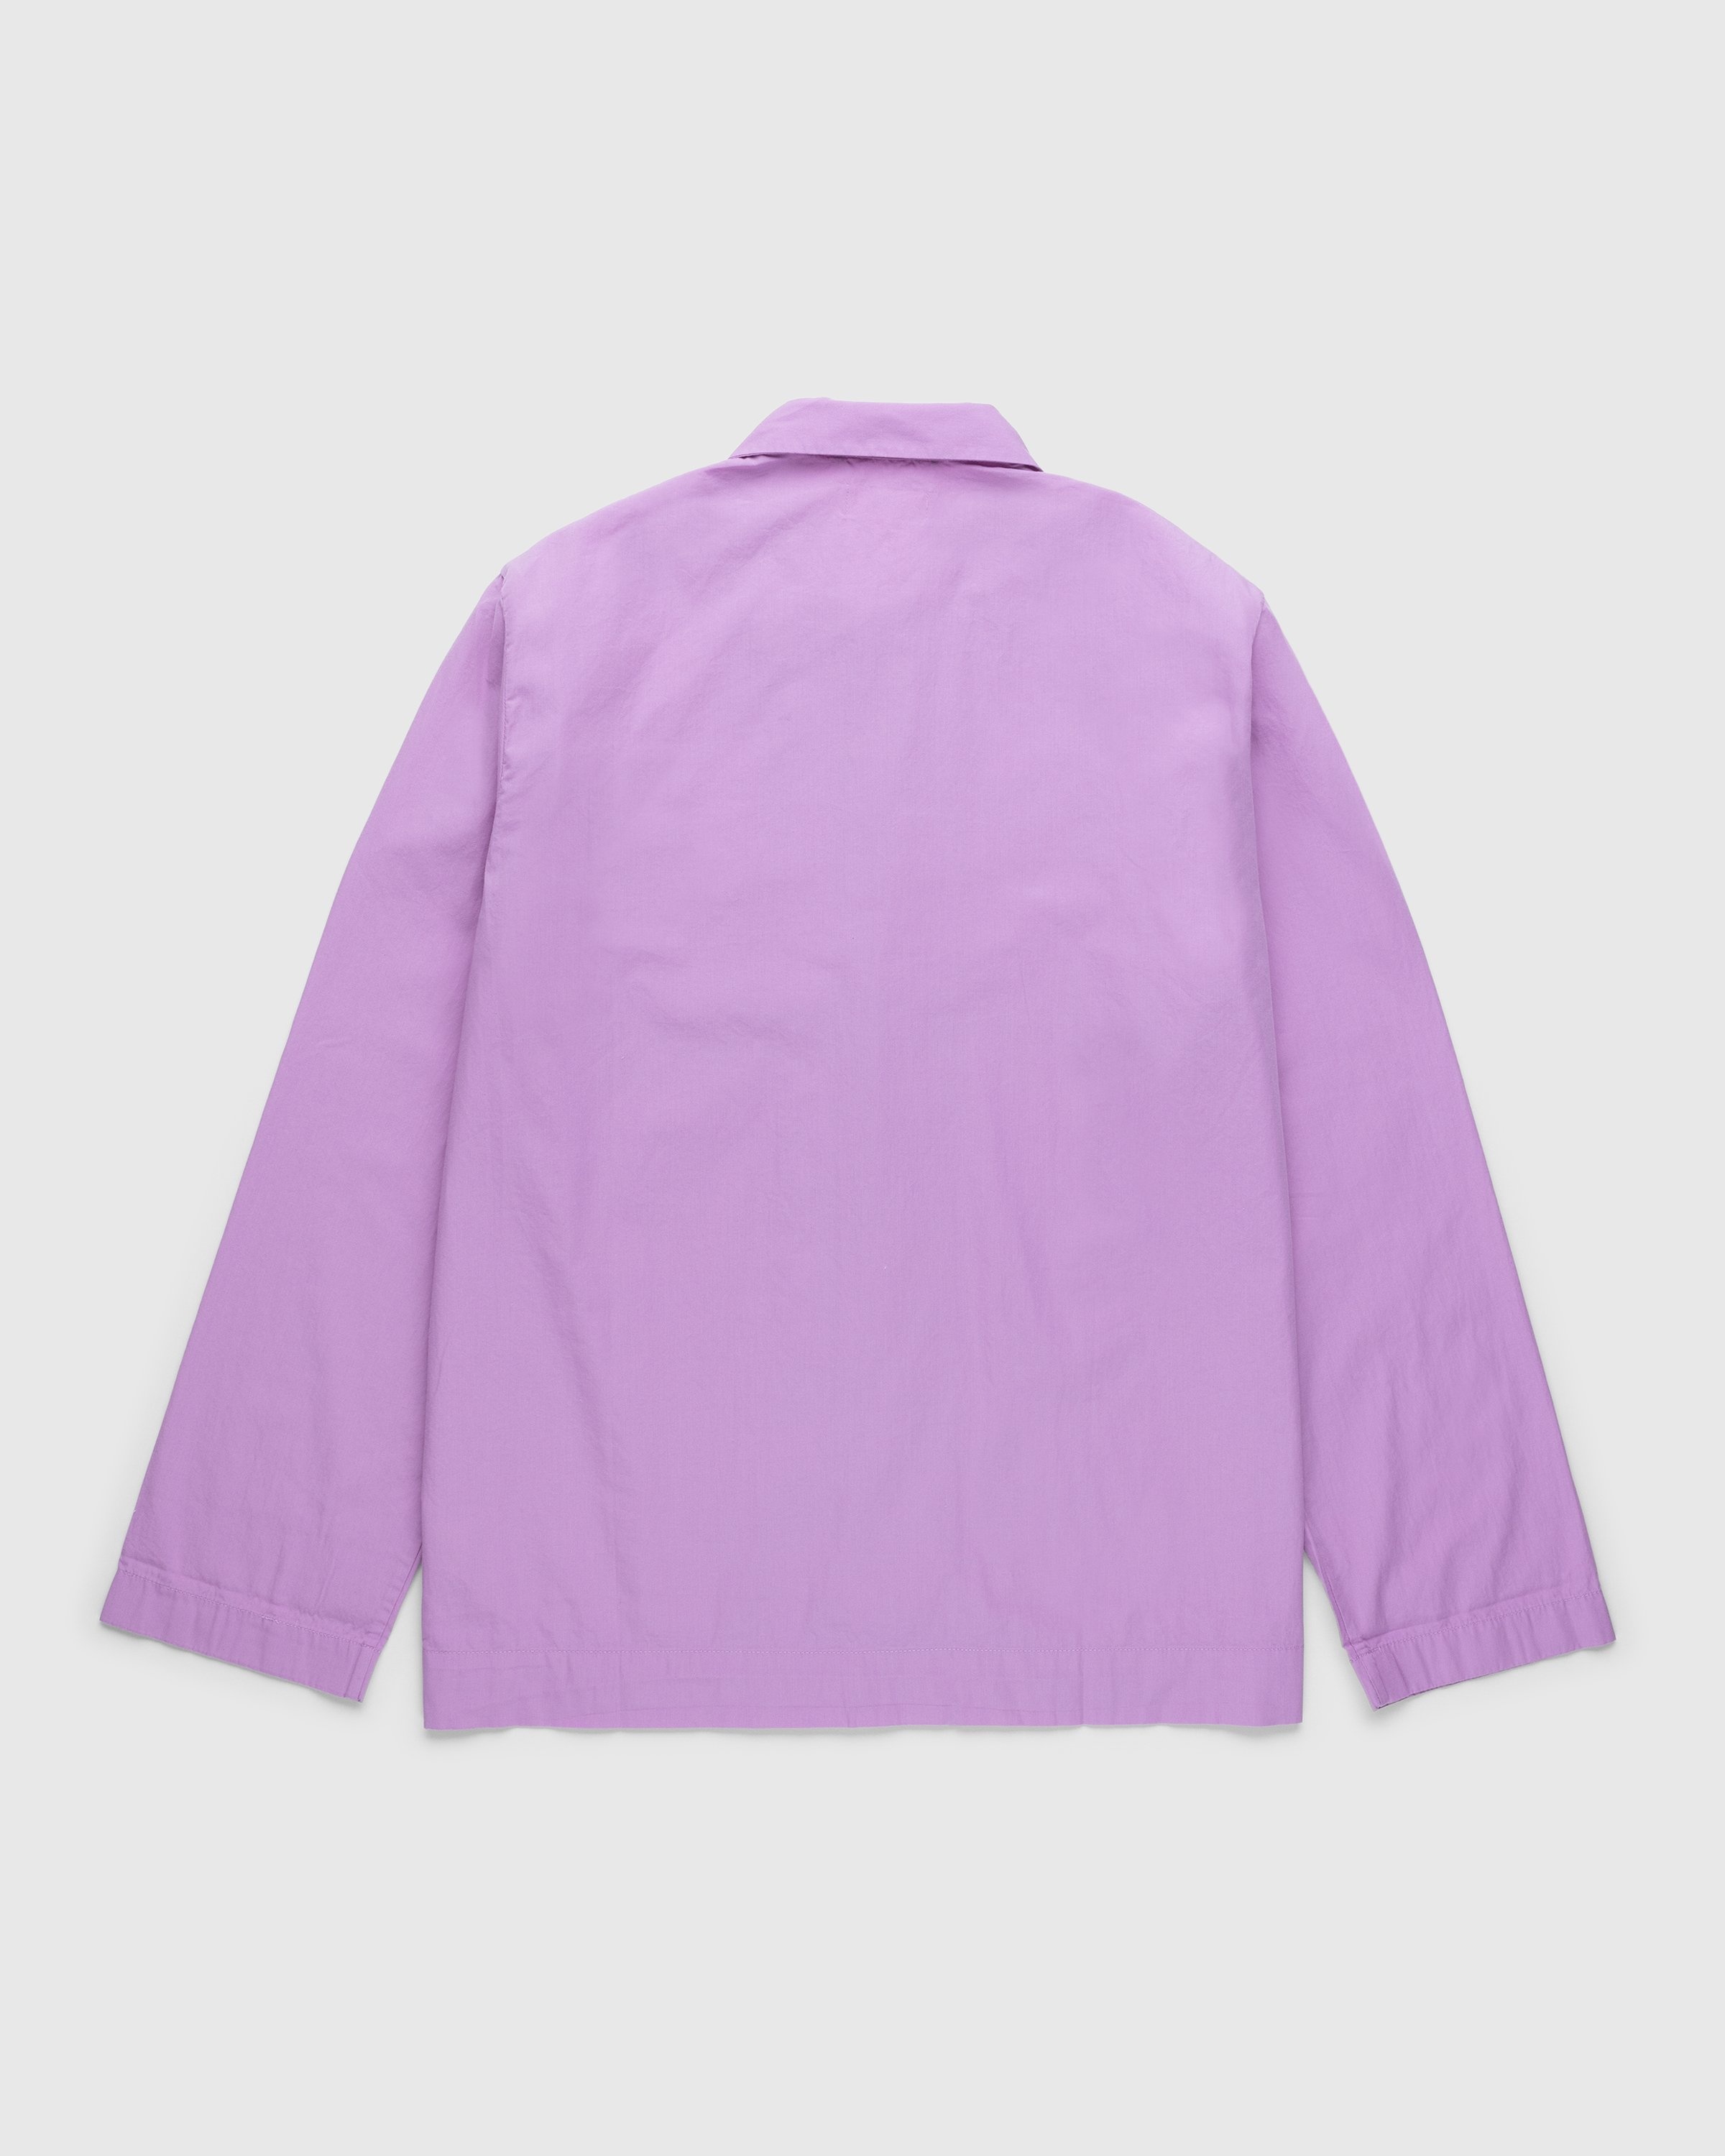 Tekla – Cotton Poplin Pyjamas Shirt Purple Pink - Loungewear - Pink - Image 2